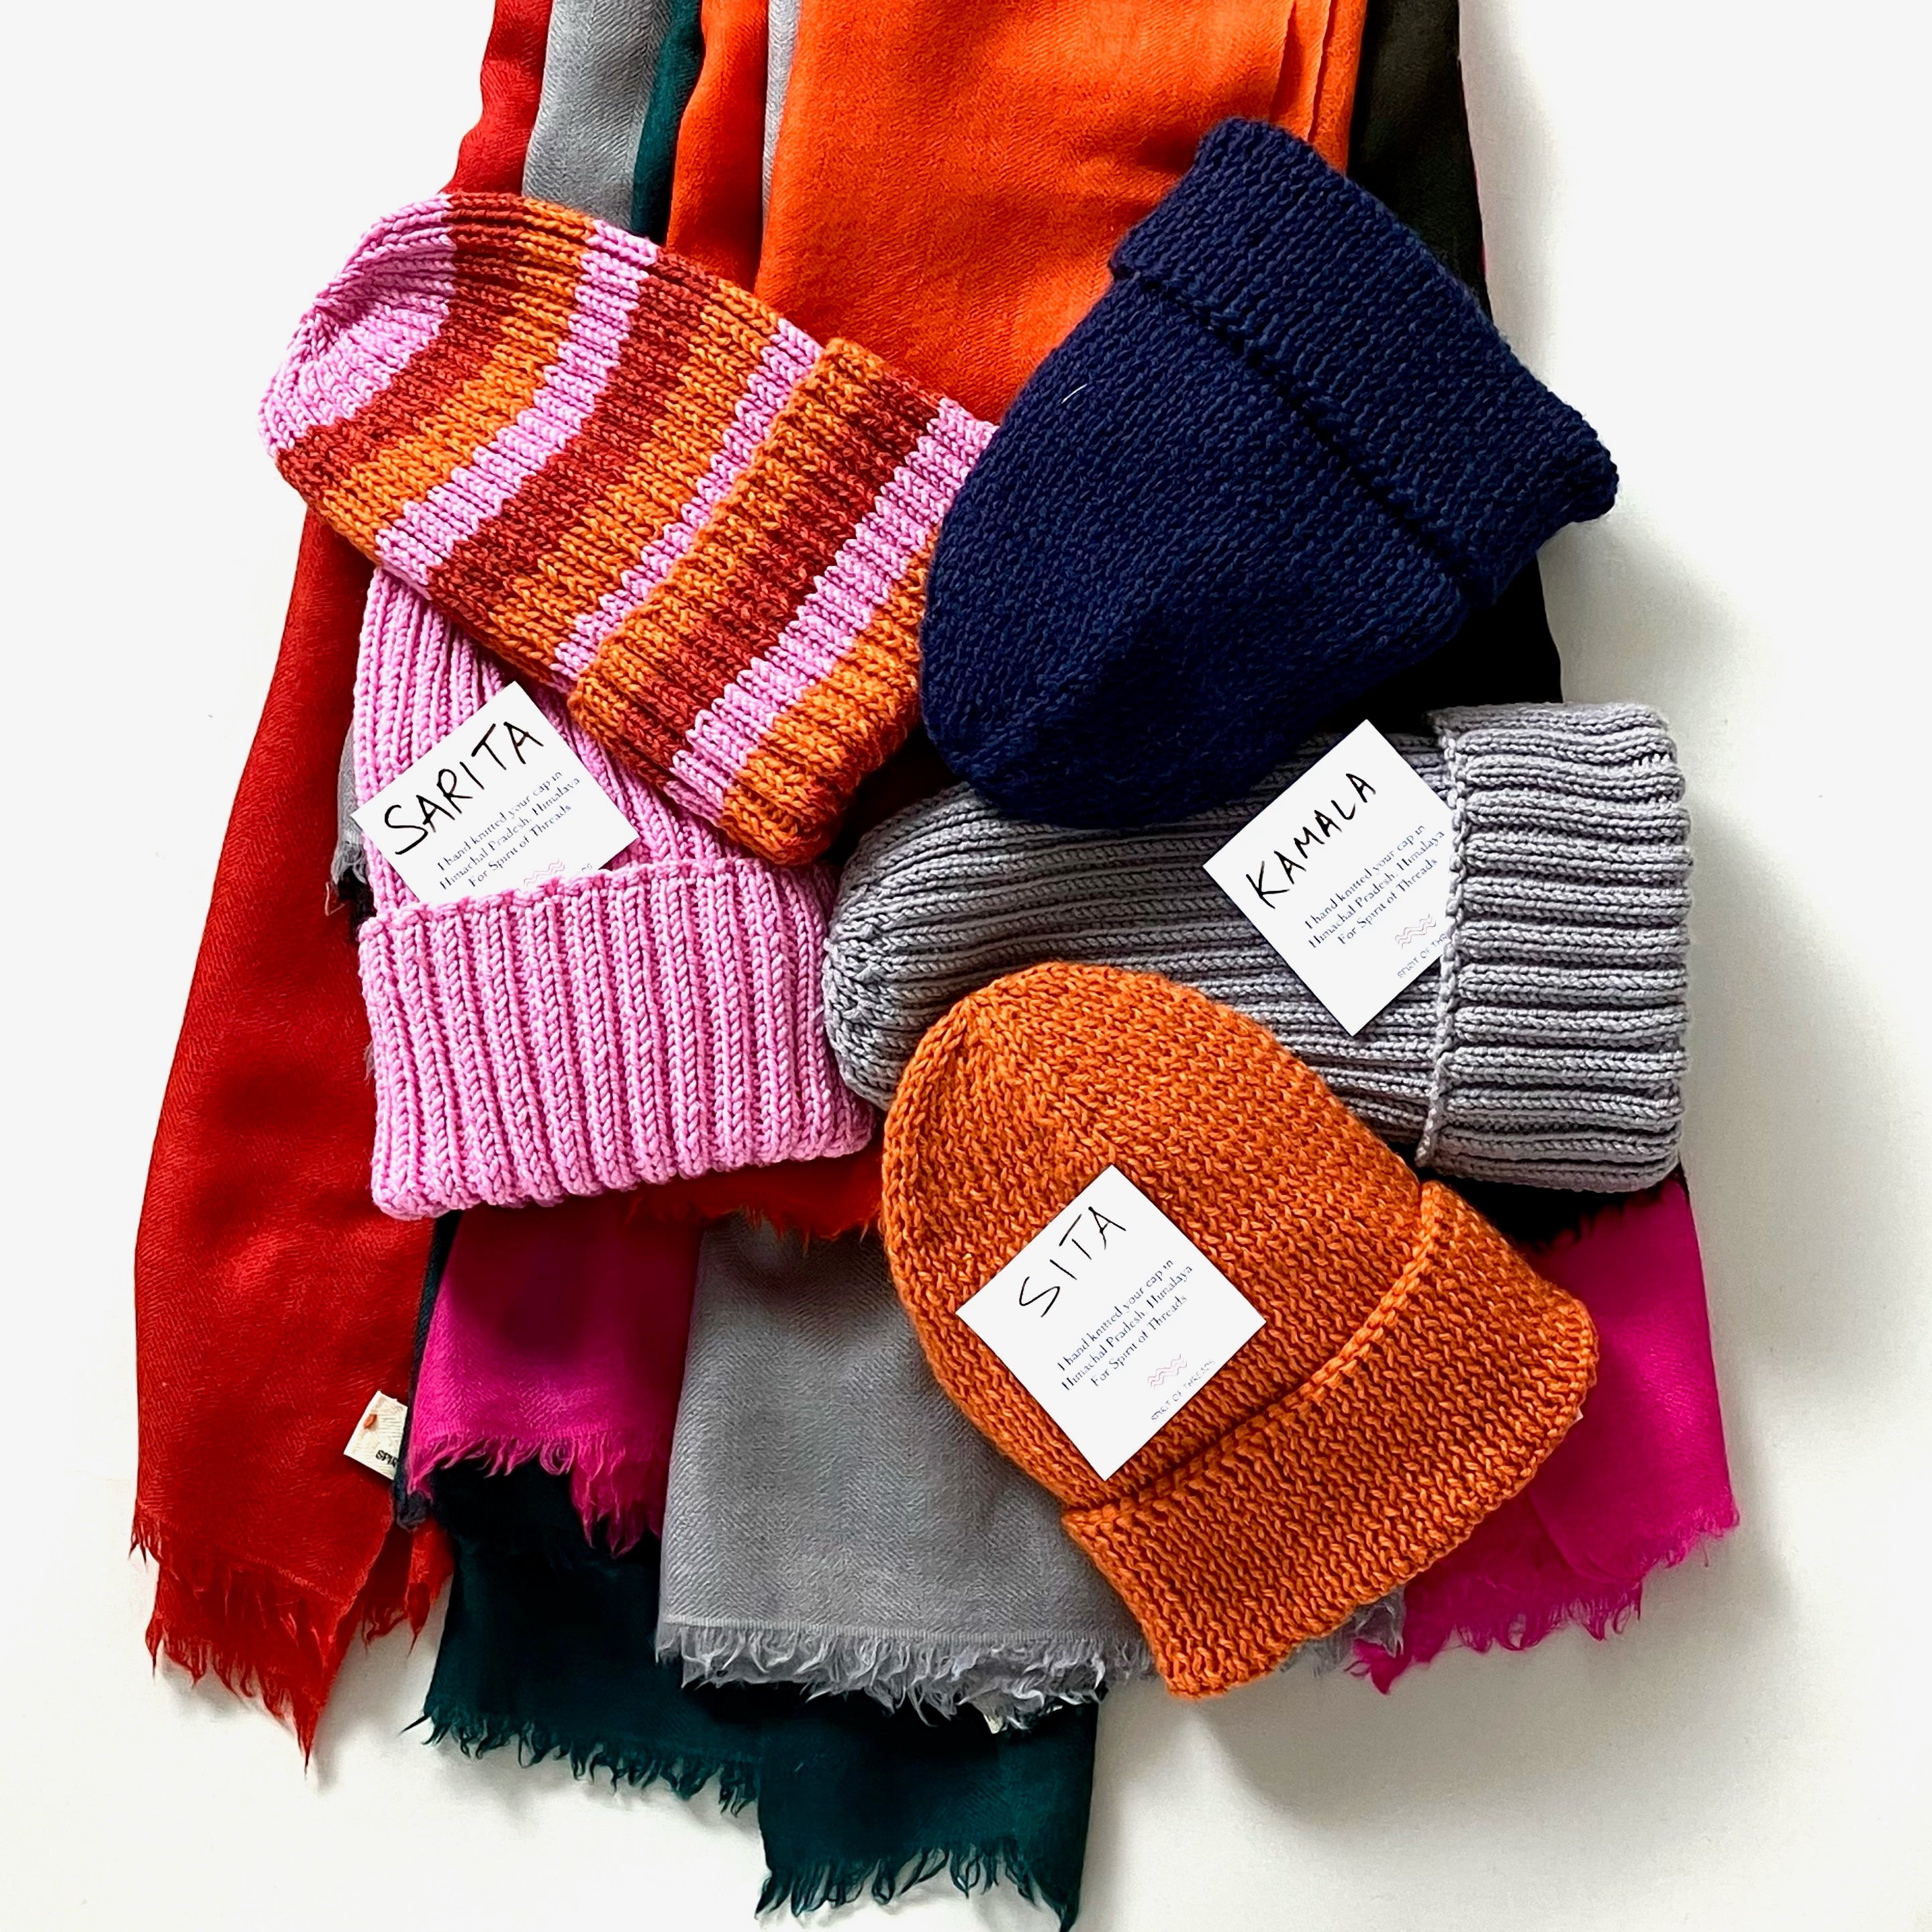 Hand-knit wool hat from Himachal Pradesh